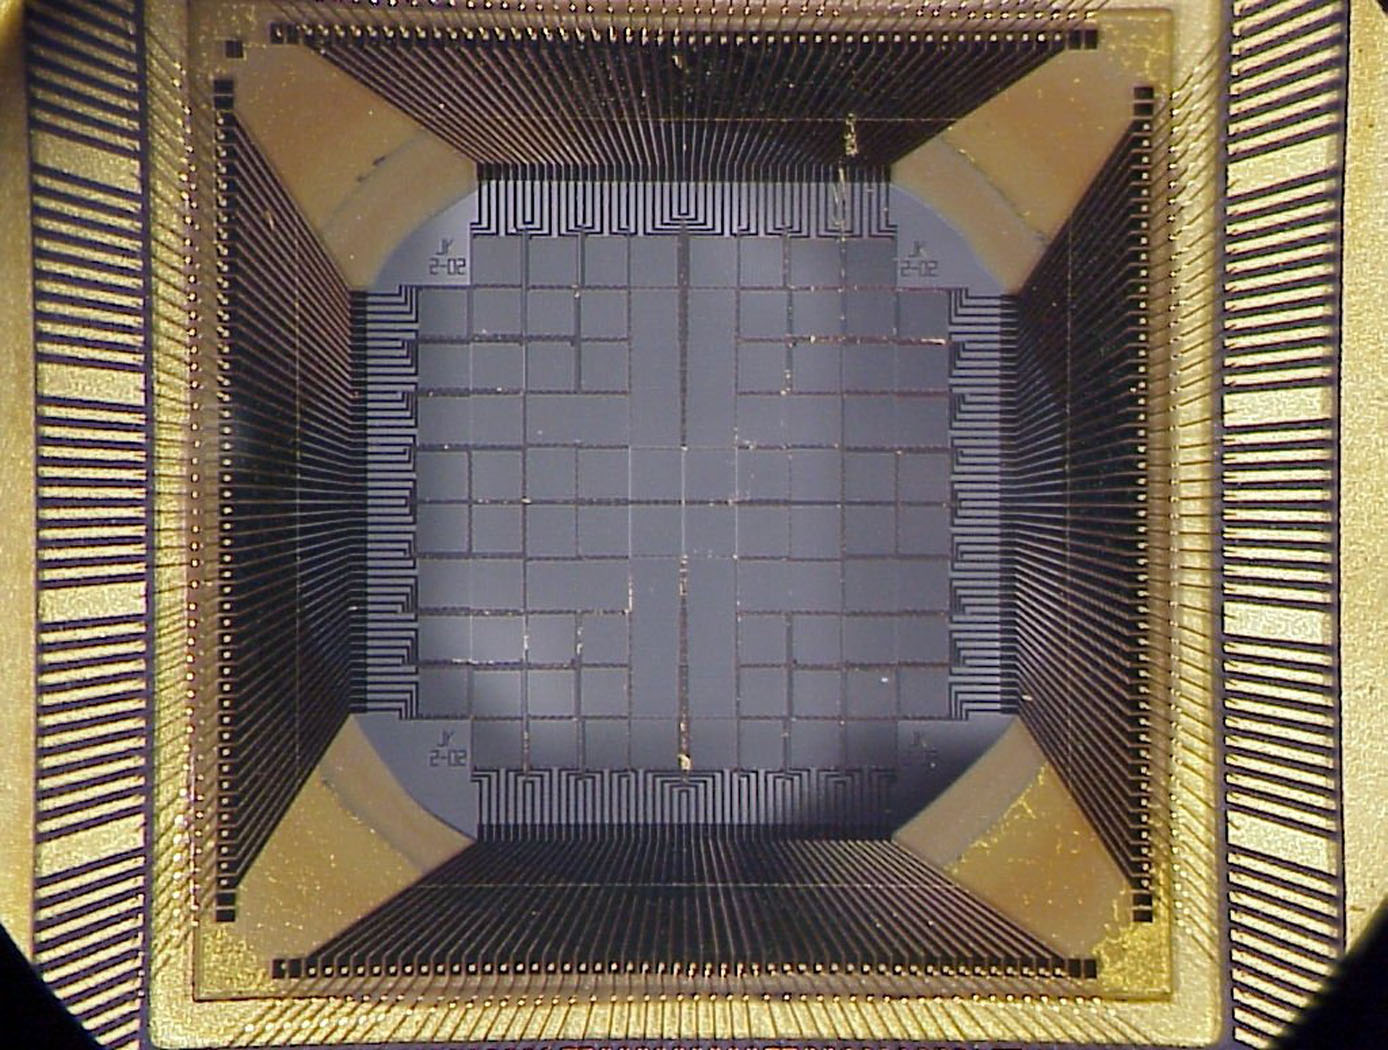 Micro-chip